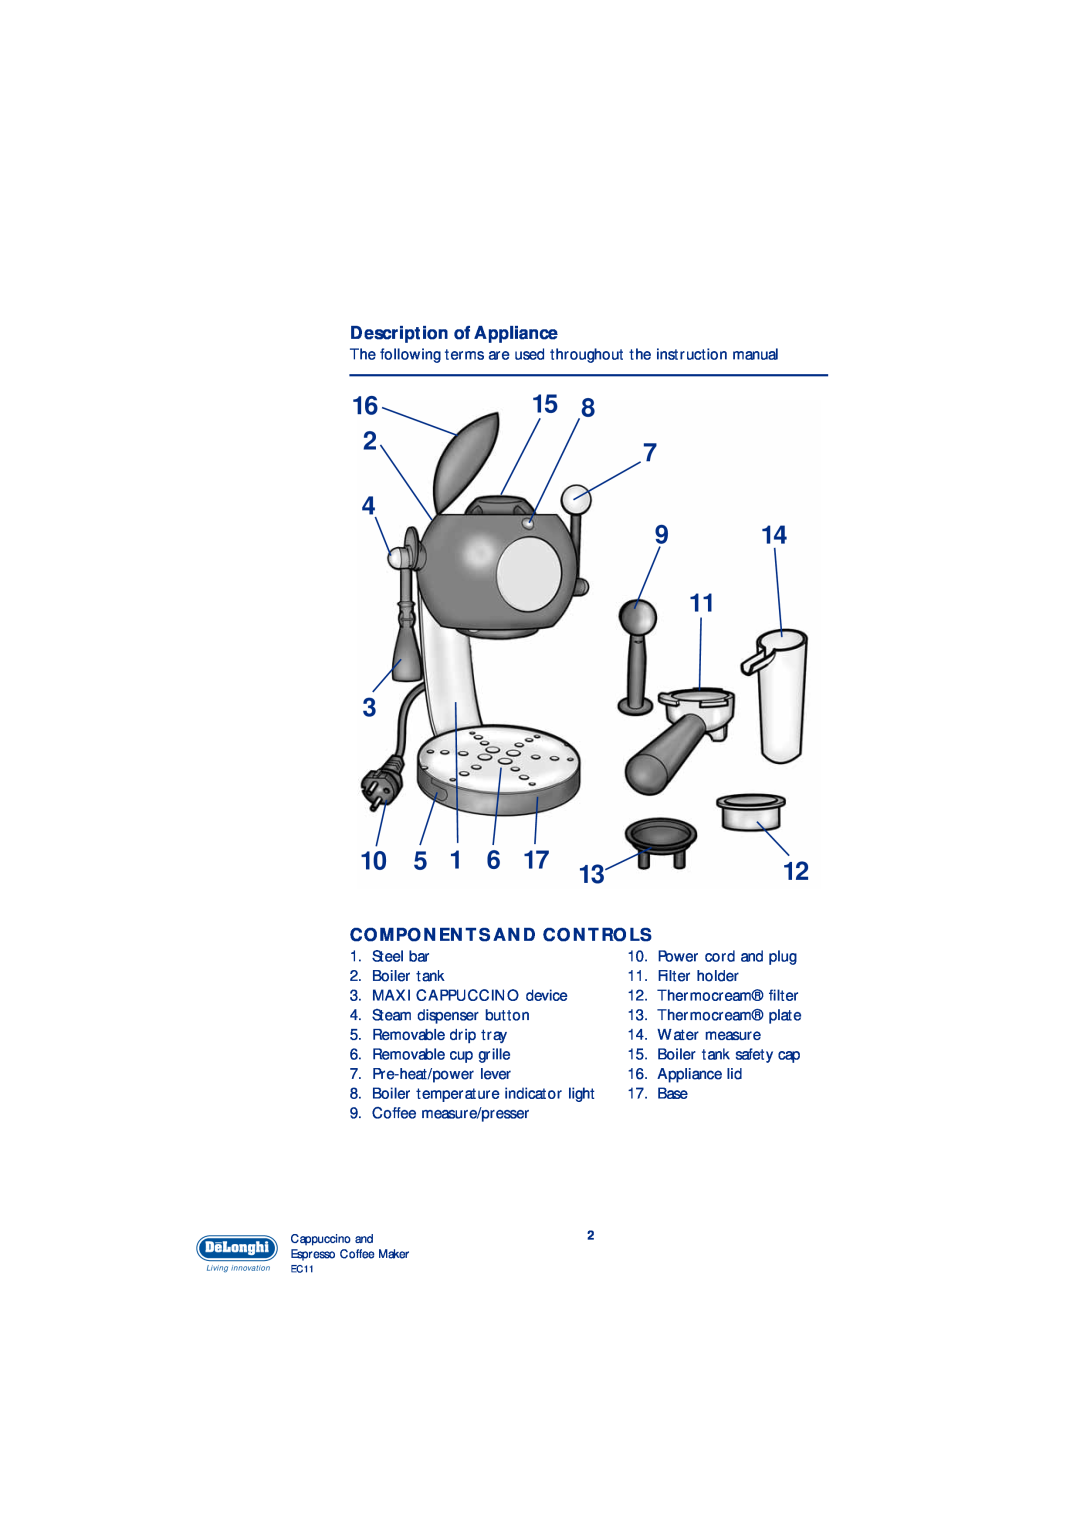 DeLonghi EC11 manual Description of Appliance, Components And Controls, 1615, Cappuccino and, Espresso Coffee Maker 